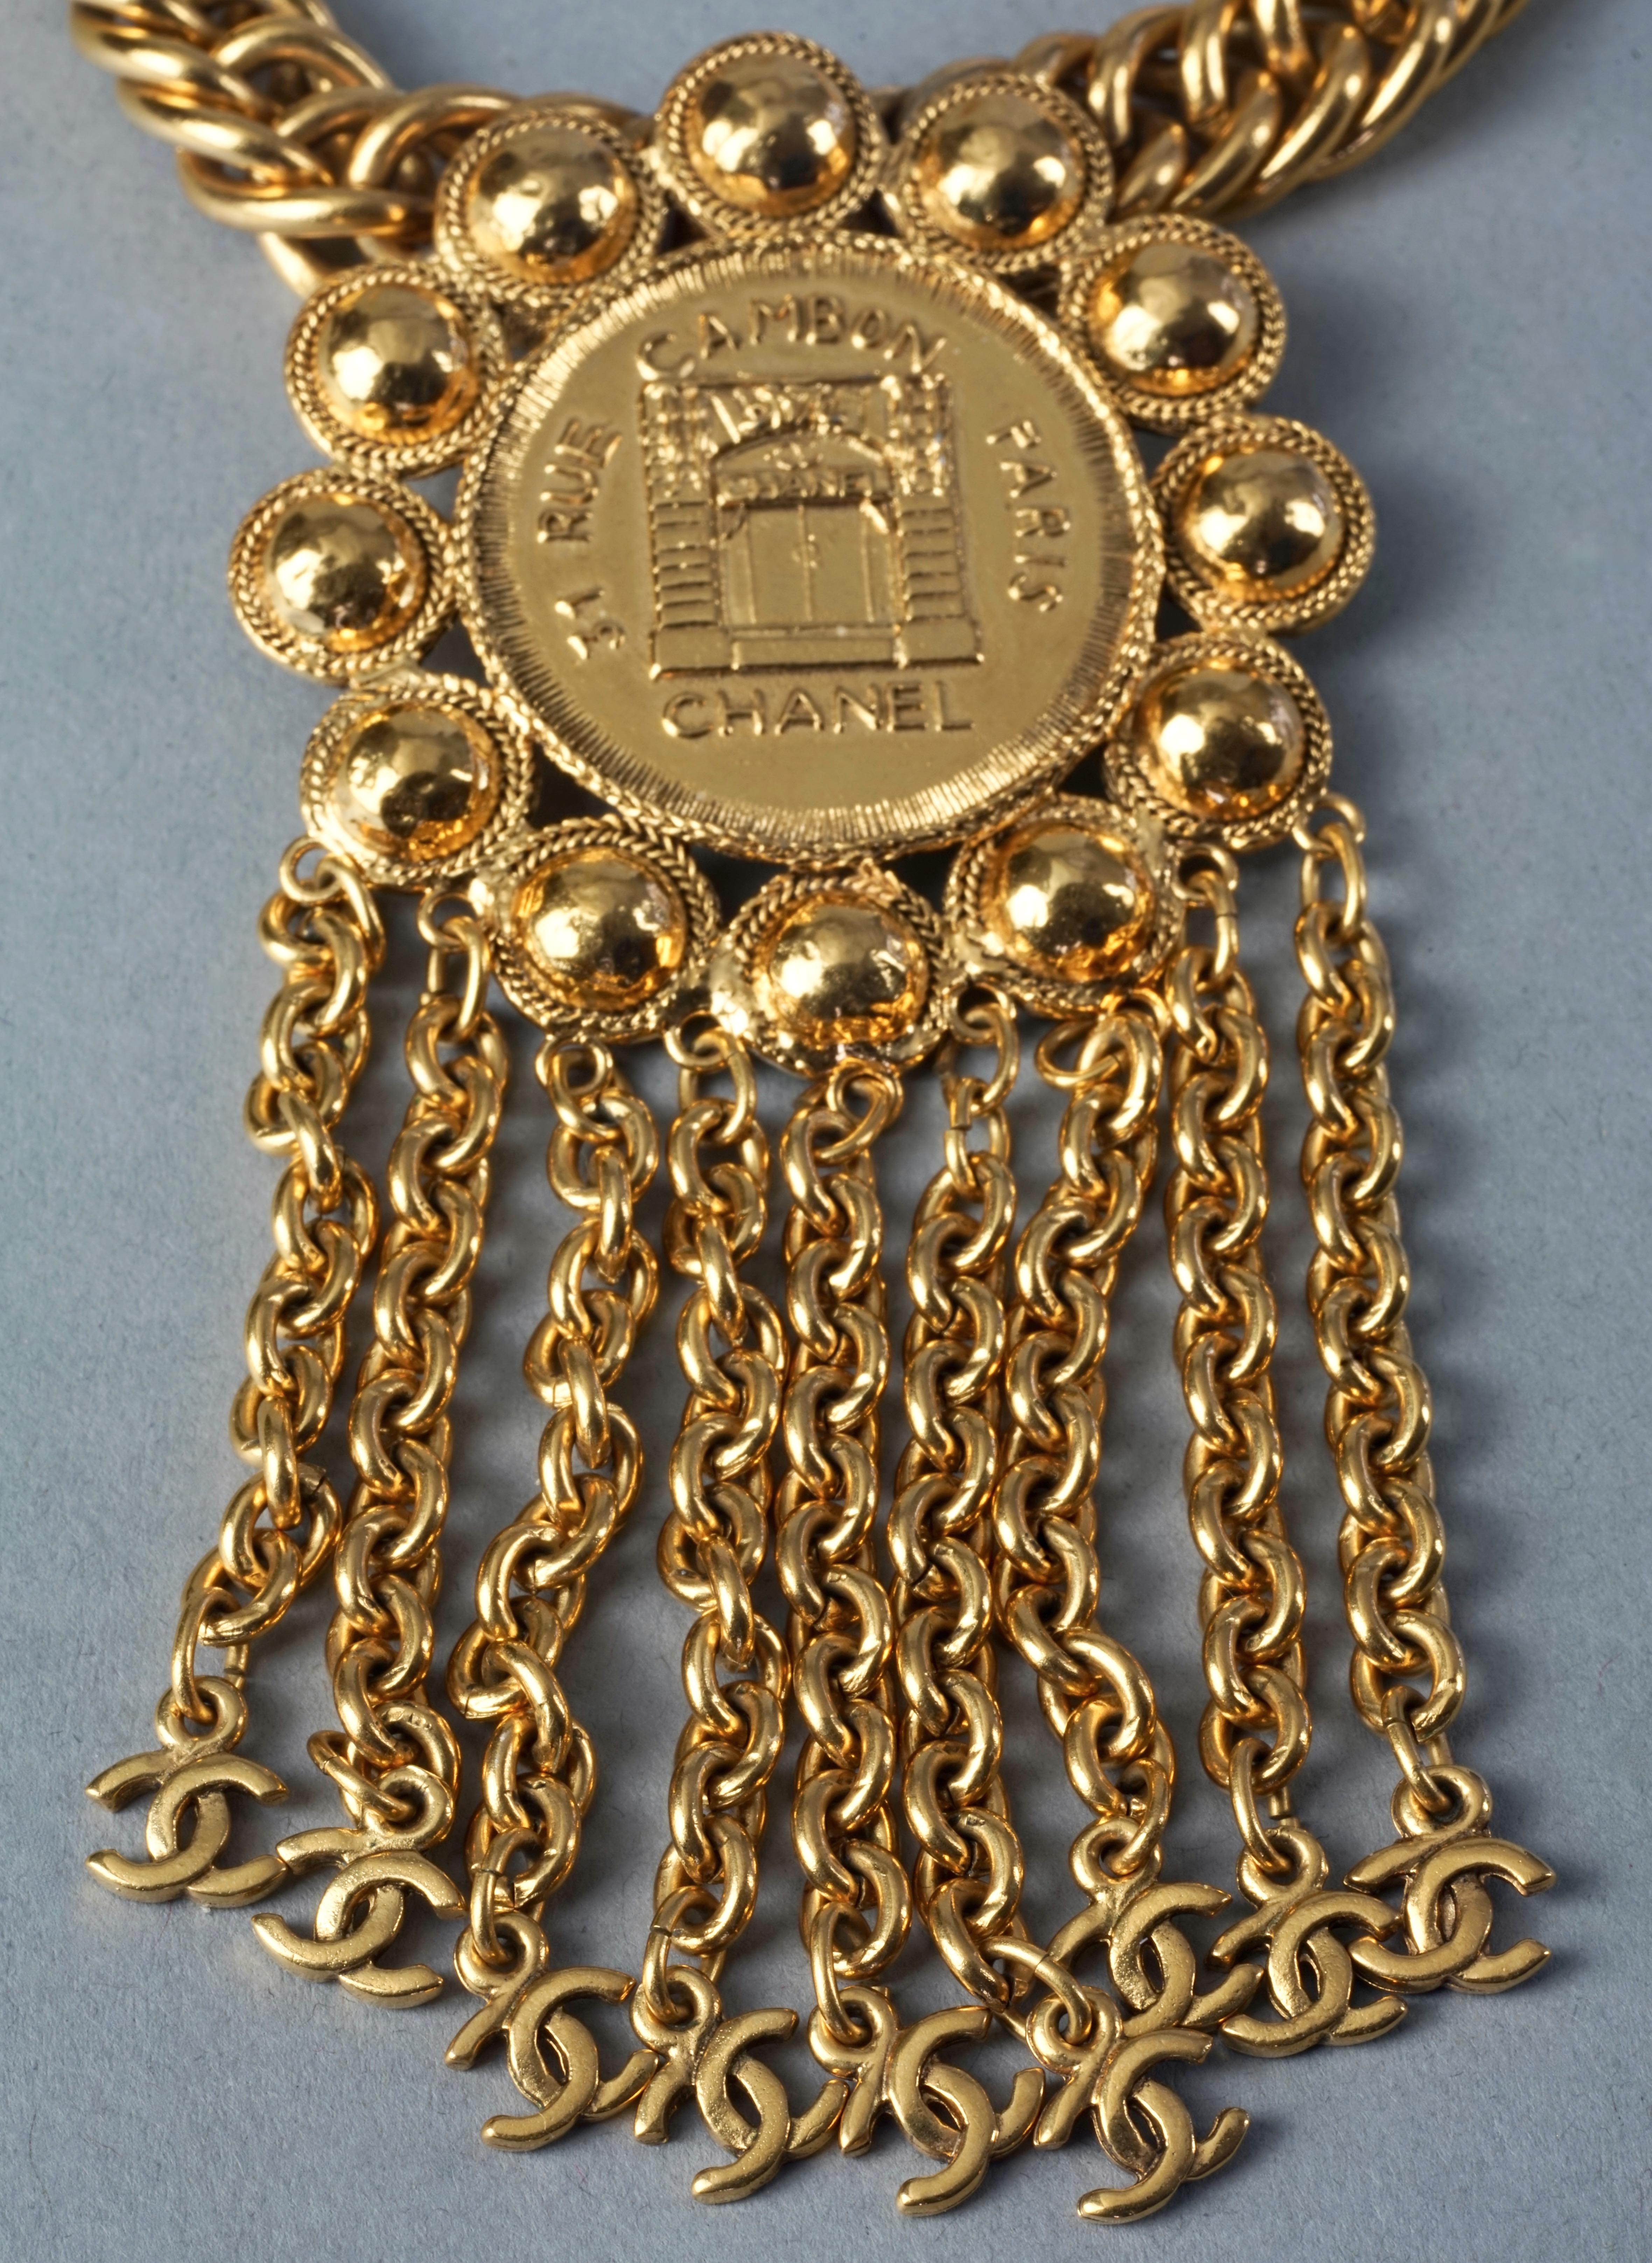 Vintage CHANEL Address Medallion Chain Fringe CC Logo Choker Necklace For Sale 2